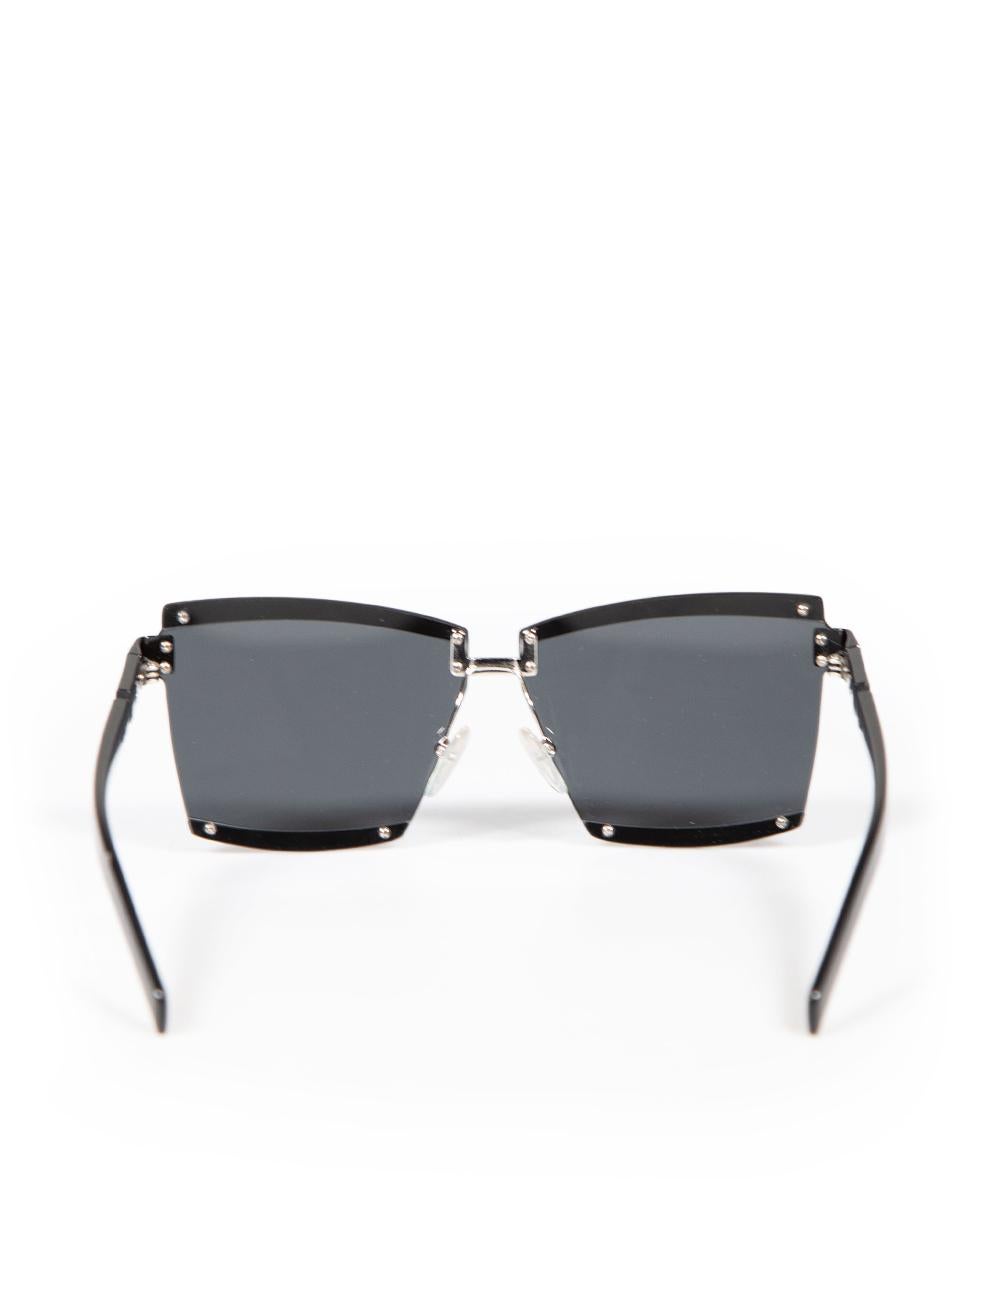 Prada Black SPR61X Square Frame Sunglasses In Good Condition For Sale In London, GB